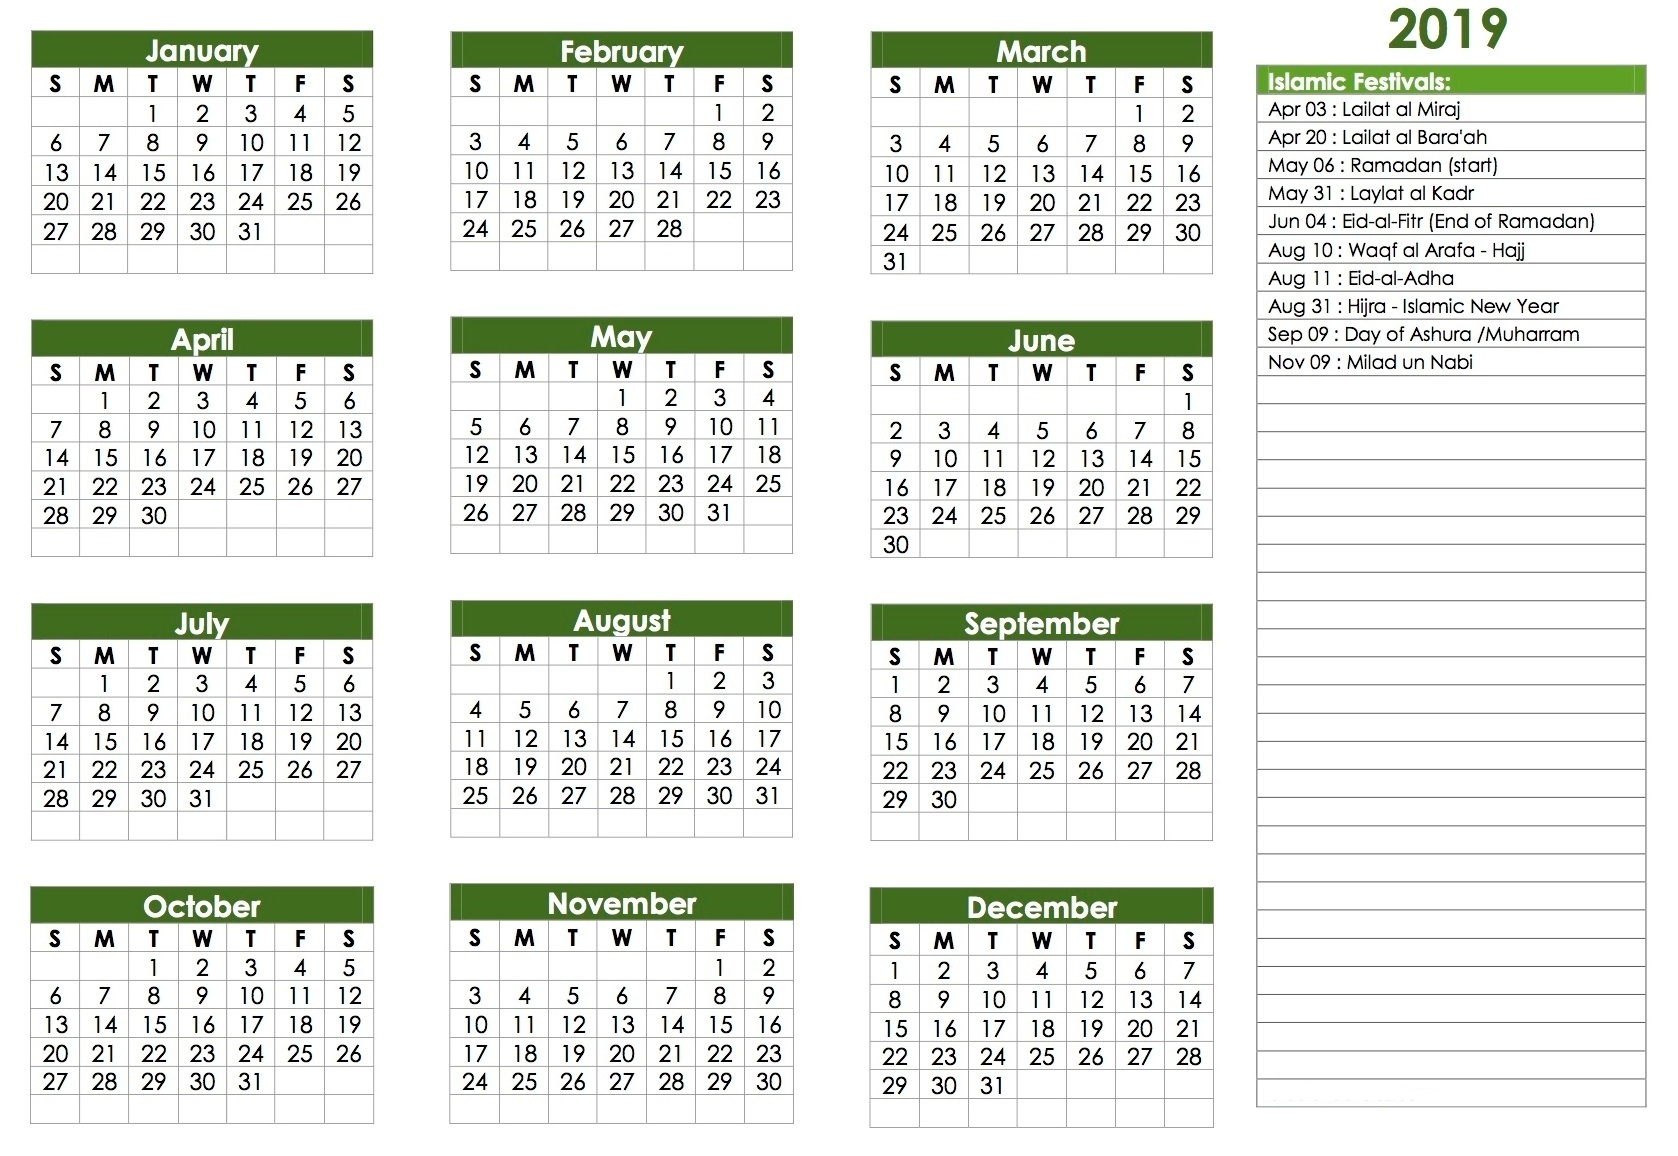 Islamic Calendar 2019 I Hijri Calendar 1440 - One Platform For in Which Day Are We In Arabic Calendar